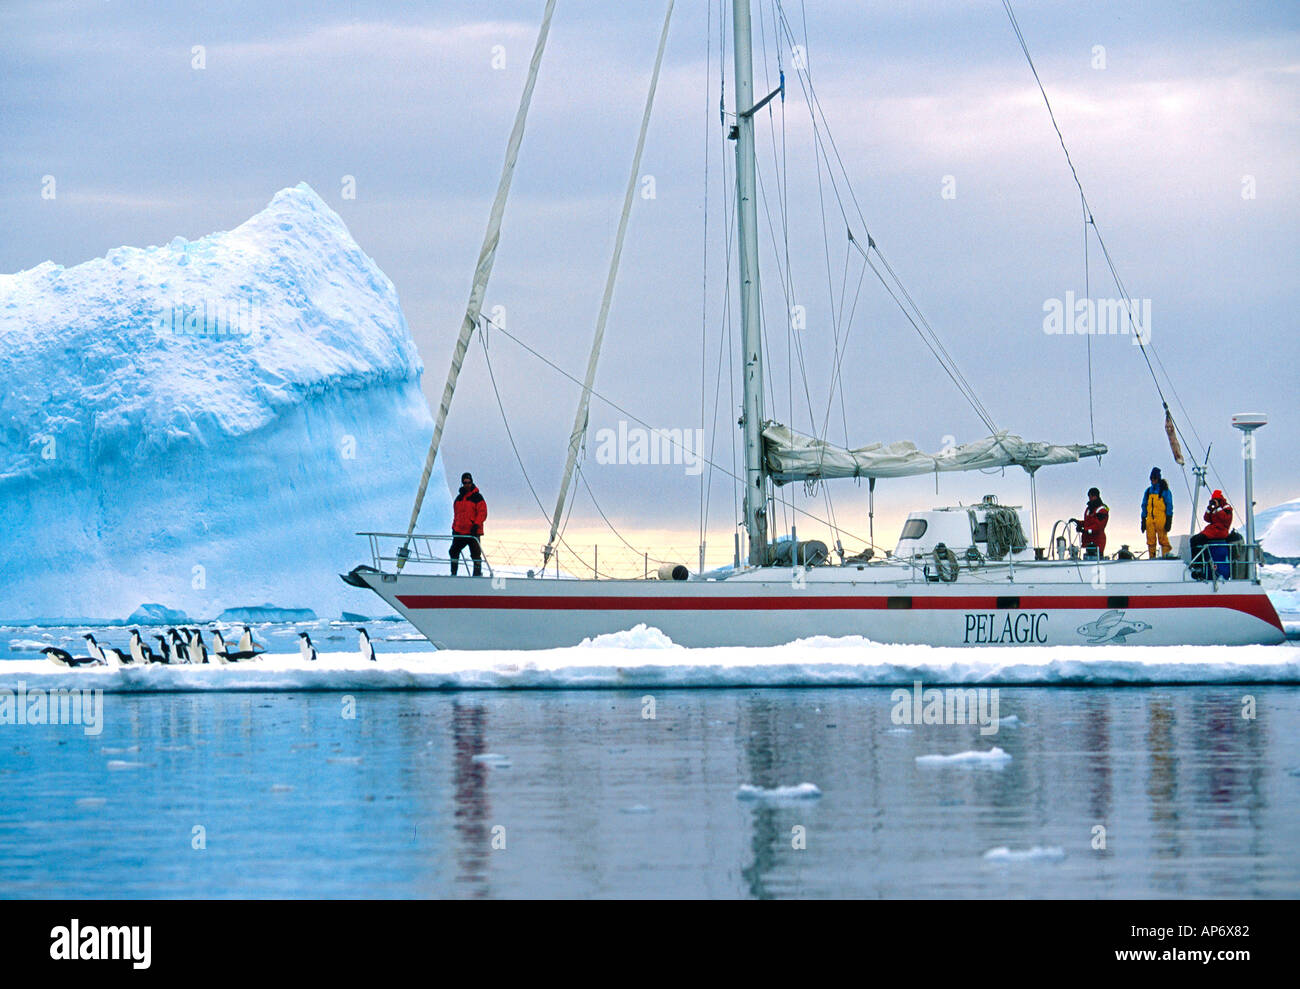 The Yacht Pelagic sails past penguins in Antartica Stock Photo